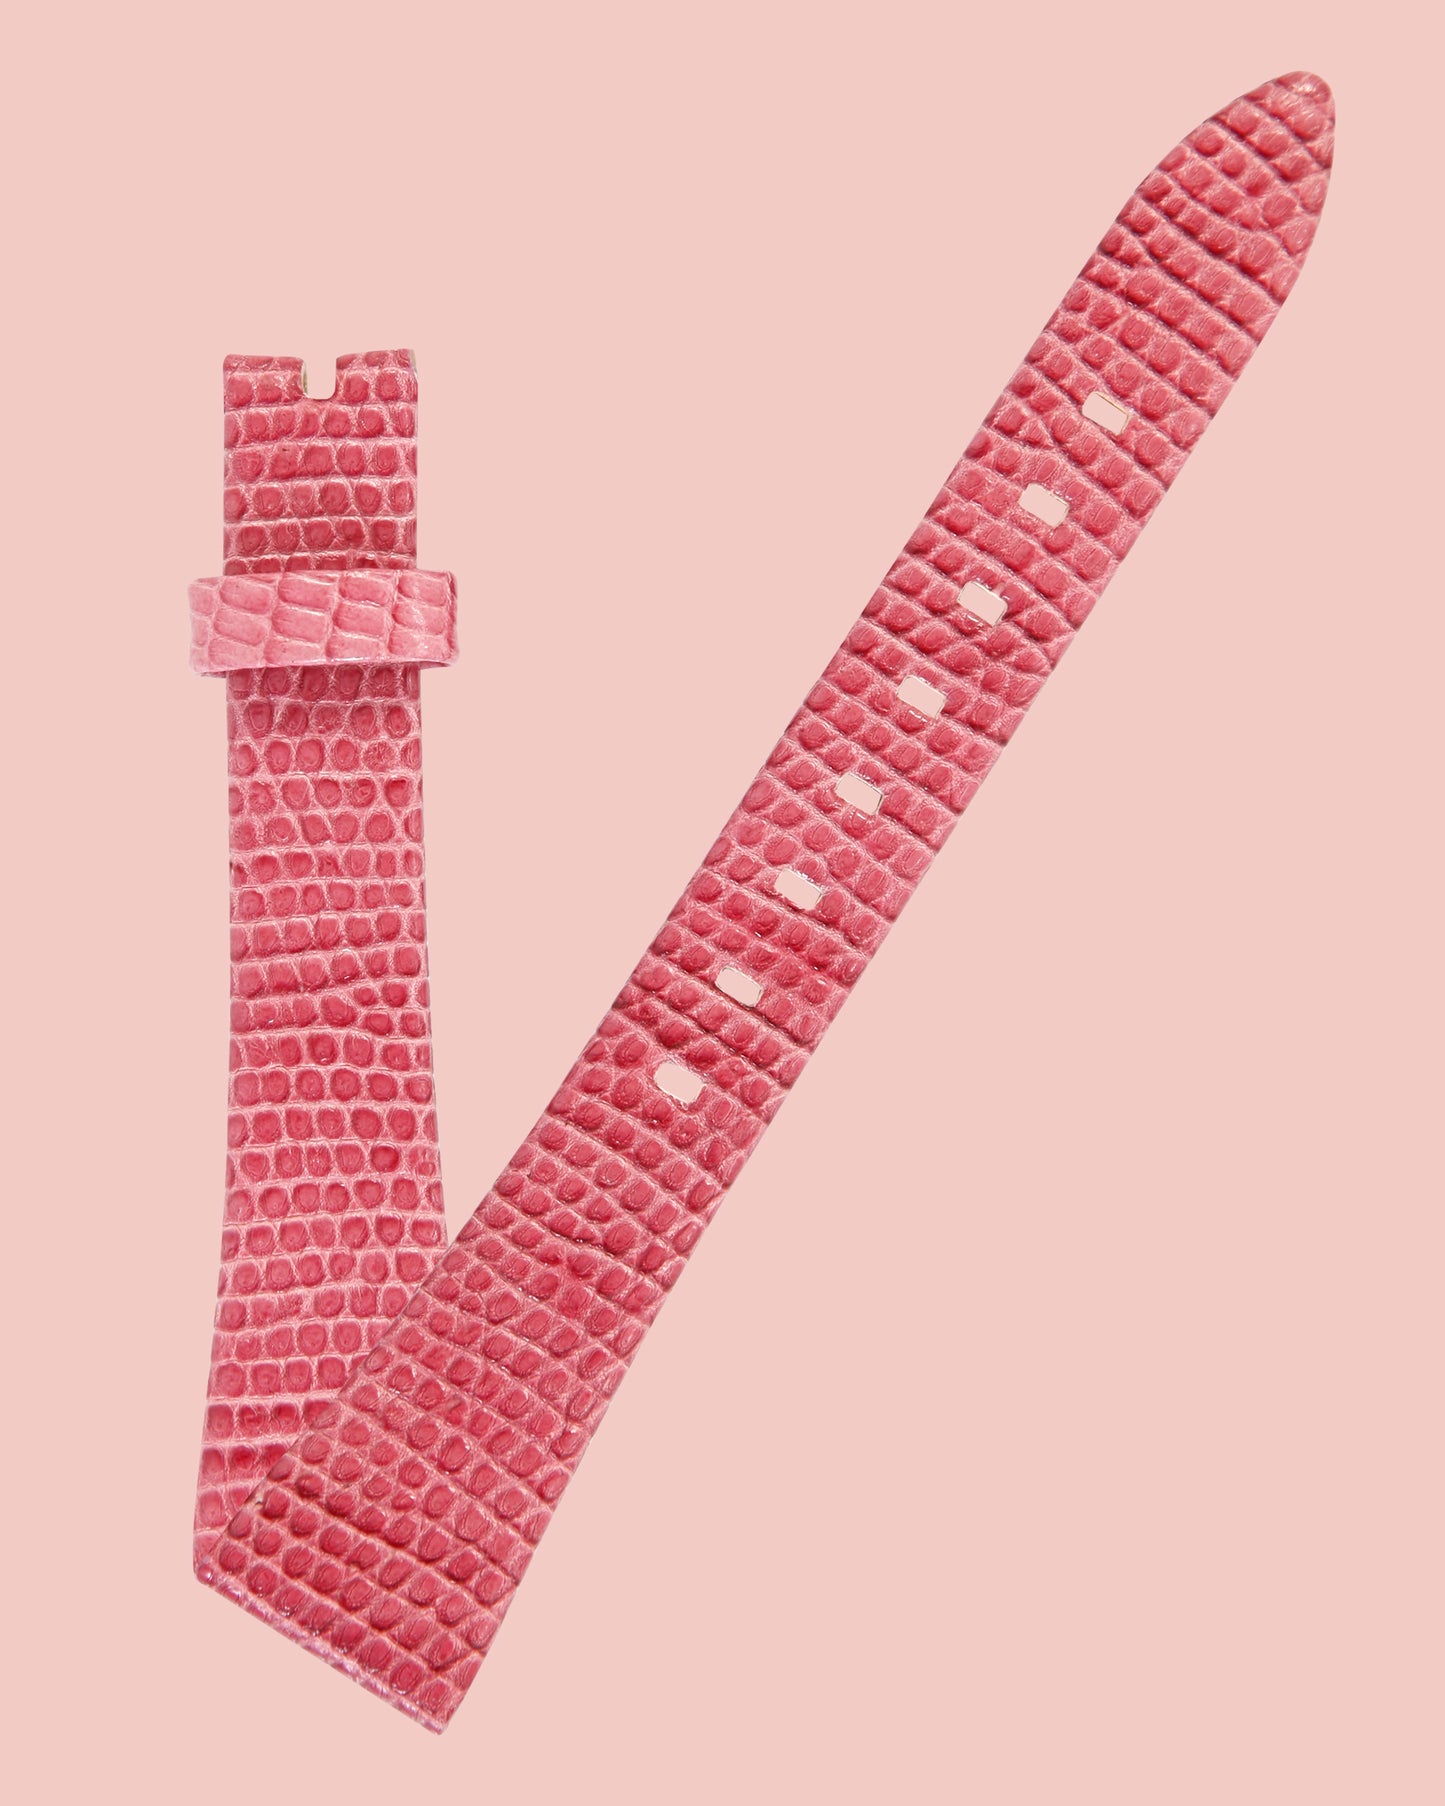 Ecclissi 18mm x 12mm Pink Leather Lizard Grain Strap 23230